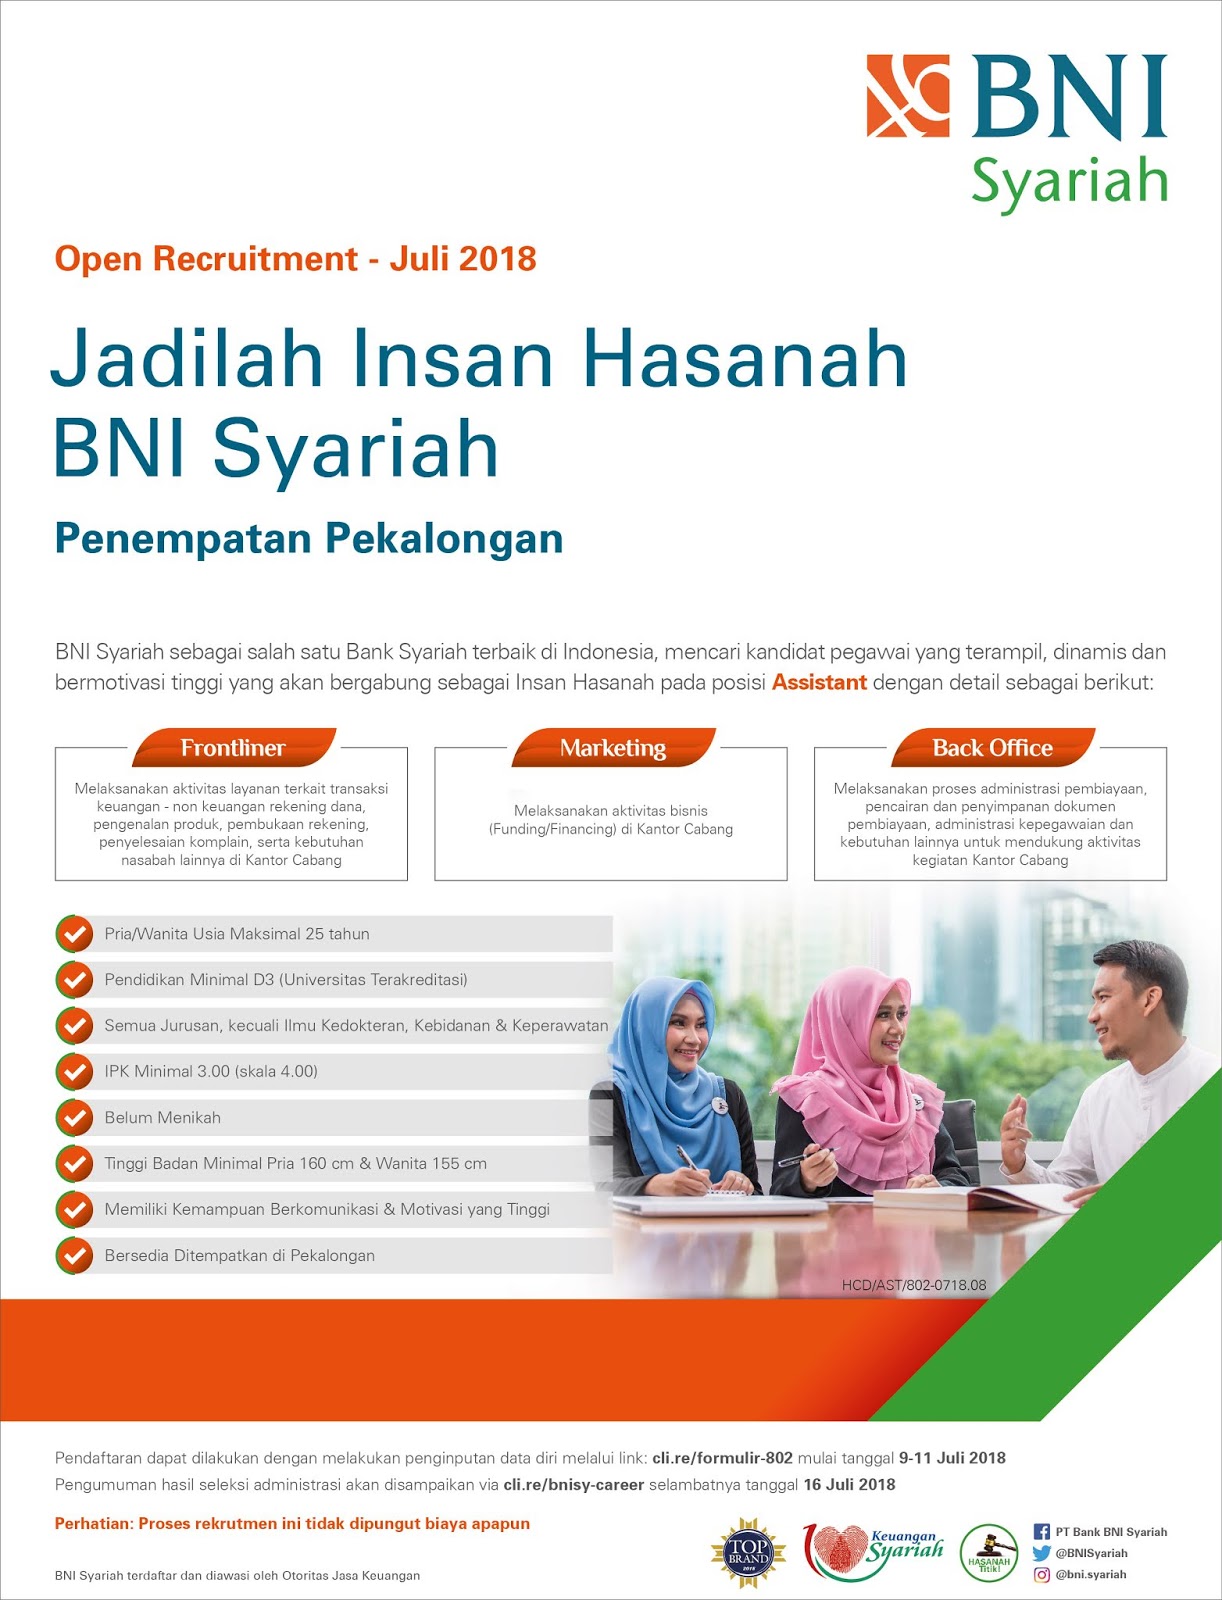 Jika kawan kawan memiliki ketertarikan untuk bekerja dalam PT Bank BNI Syariah Tbk silakan ikuti prosedur lowongan kerja berikut